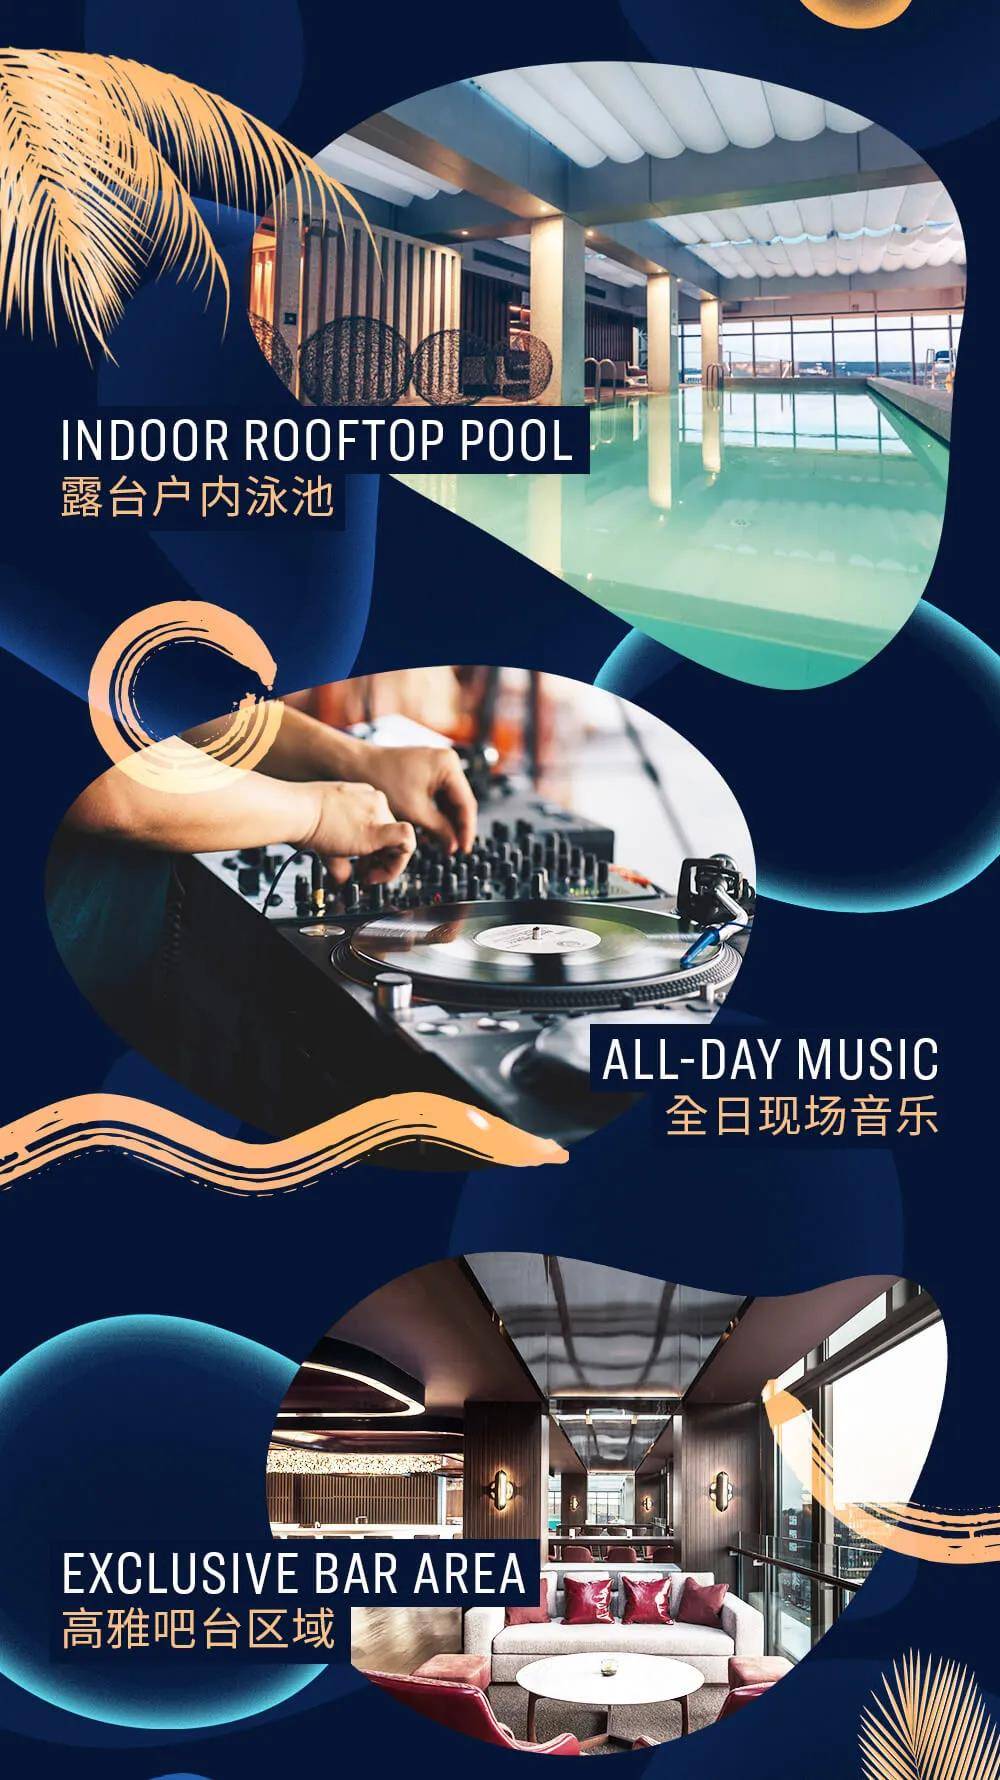 Buy GET WET! Rooftop Pool Party Cordis Experiences